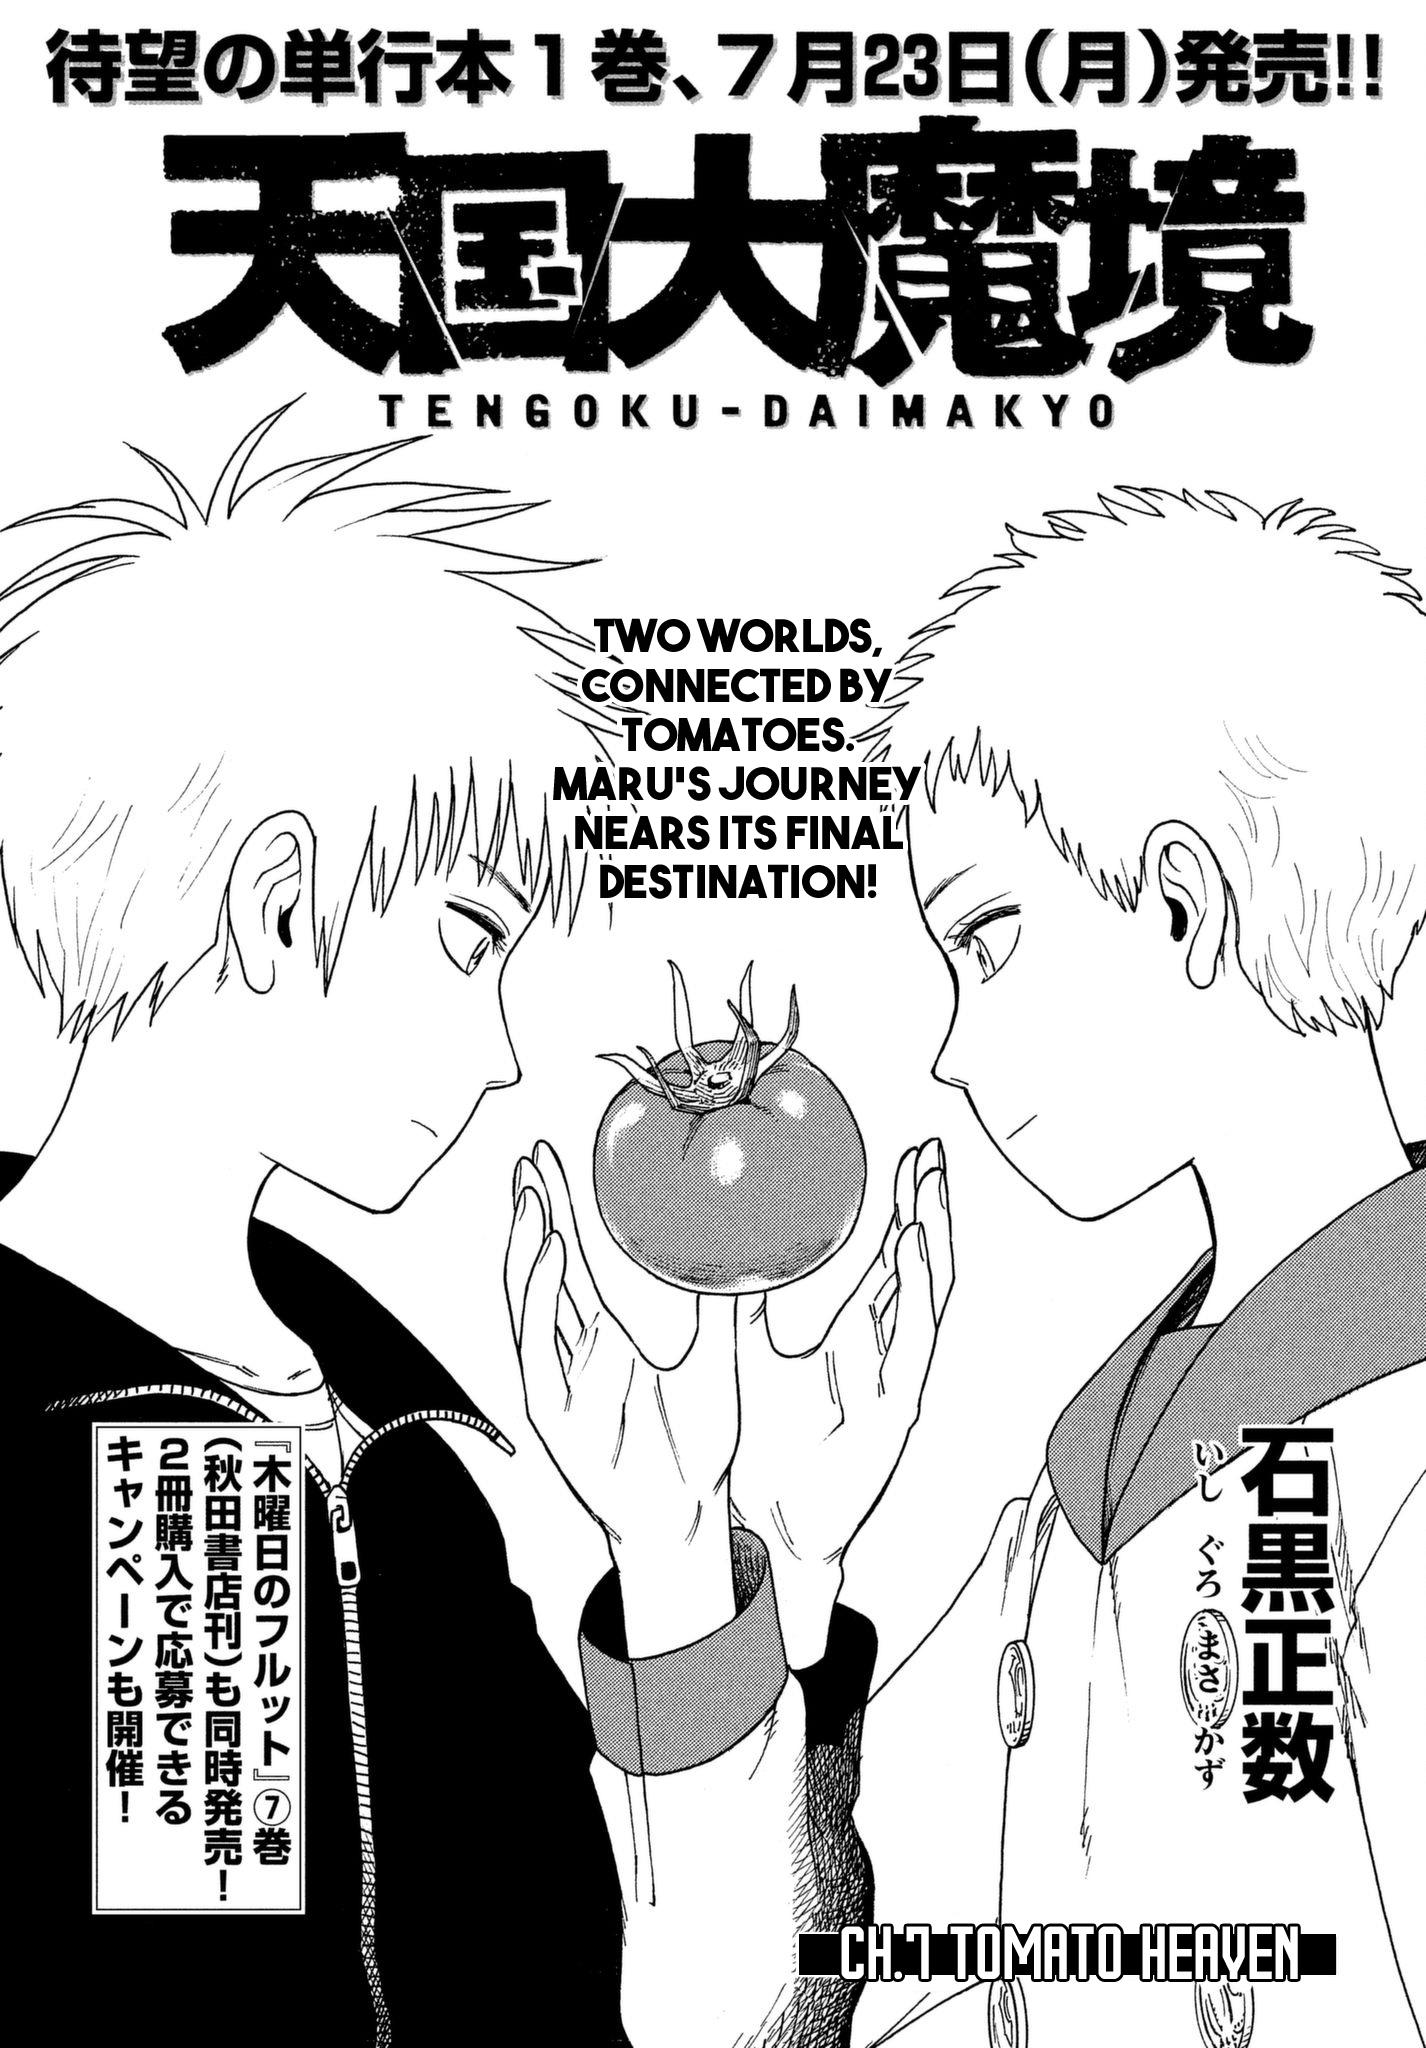 Tengoku Daimakyou Capítulo 49 - Manga Online